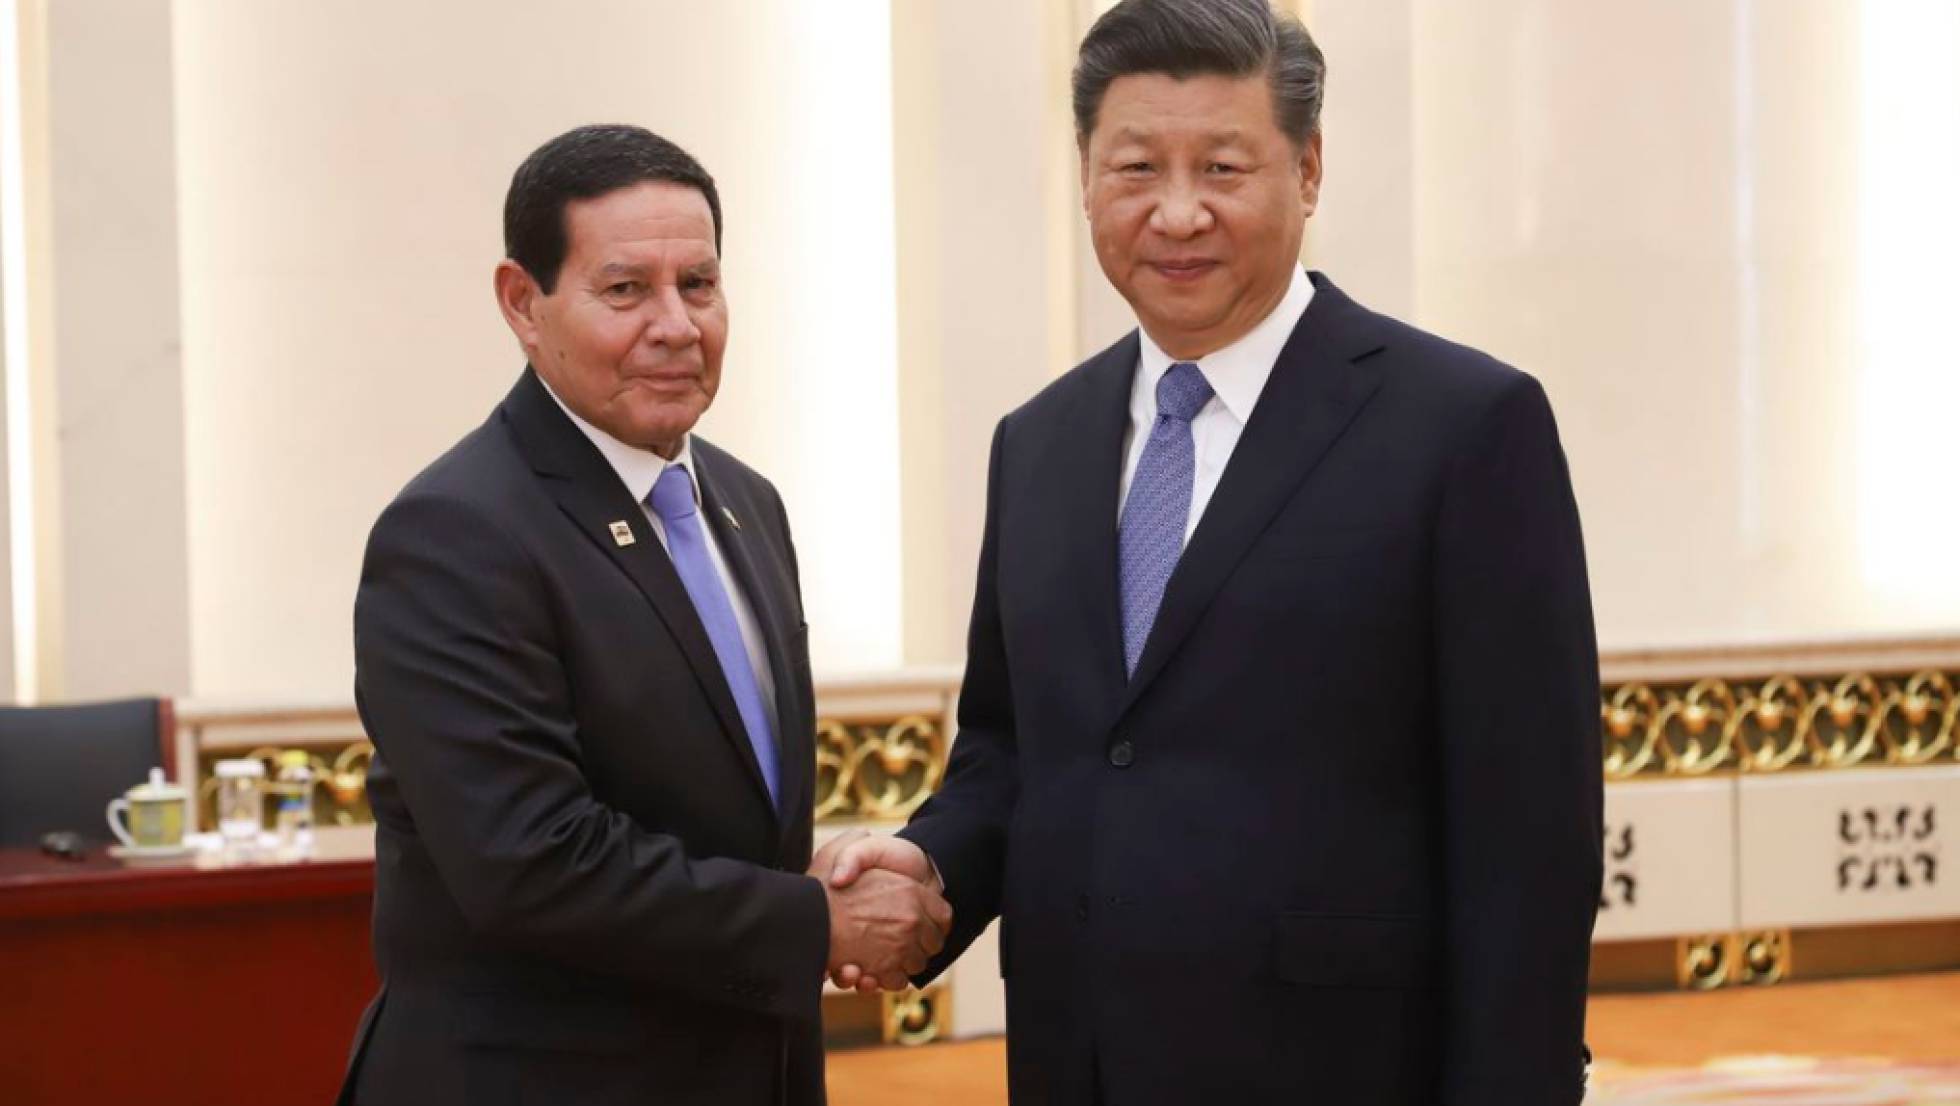 O vice Mourão e presidente da China, Xi Jinping. ADNILTON FARIAS/VPR